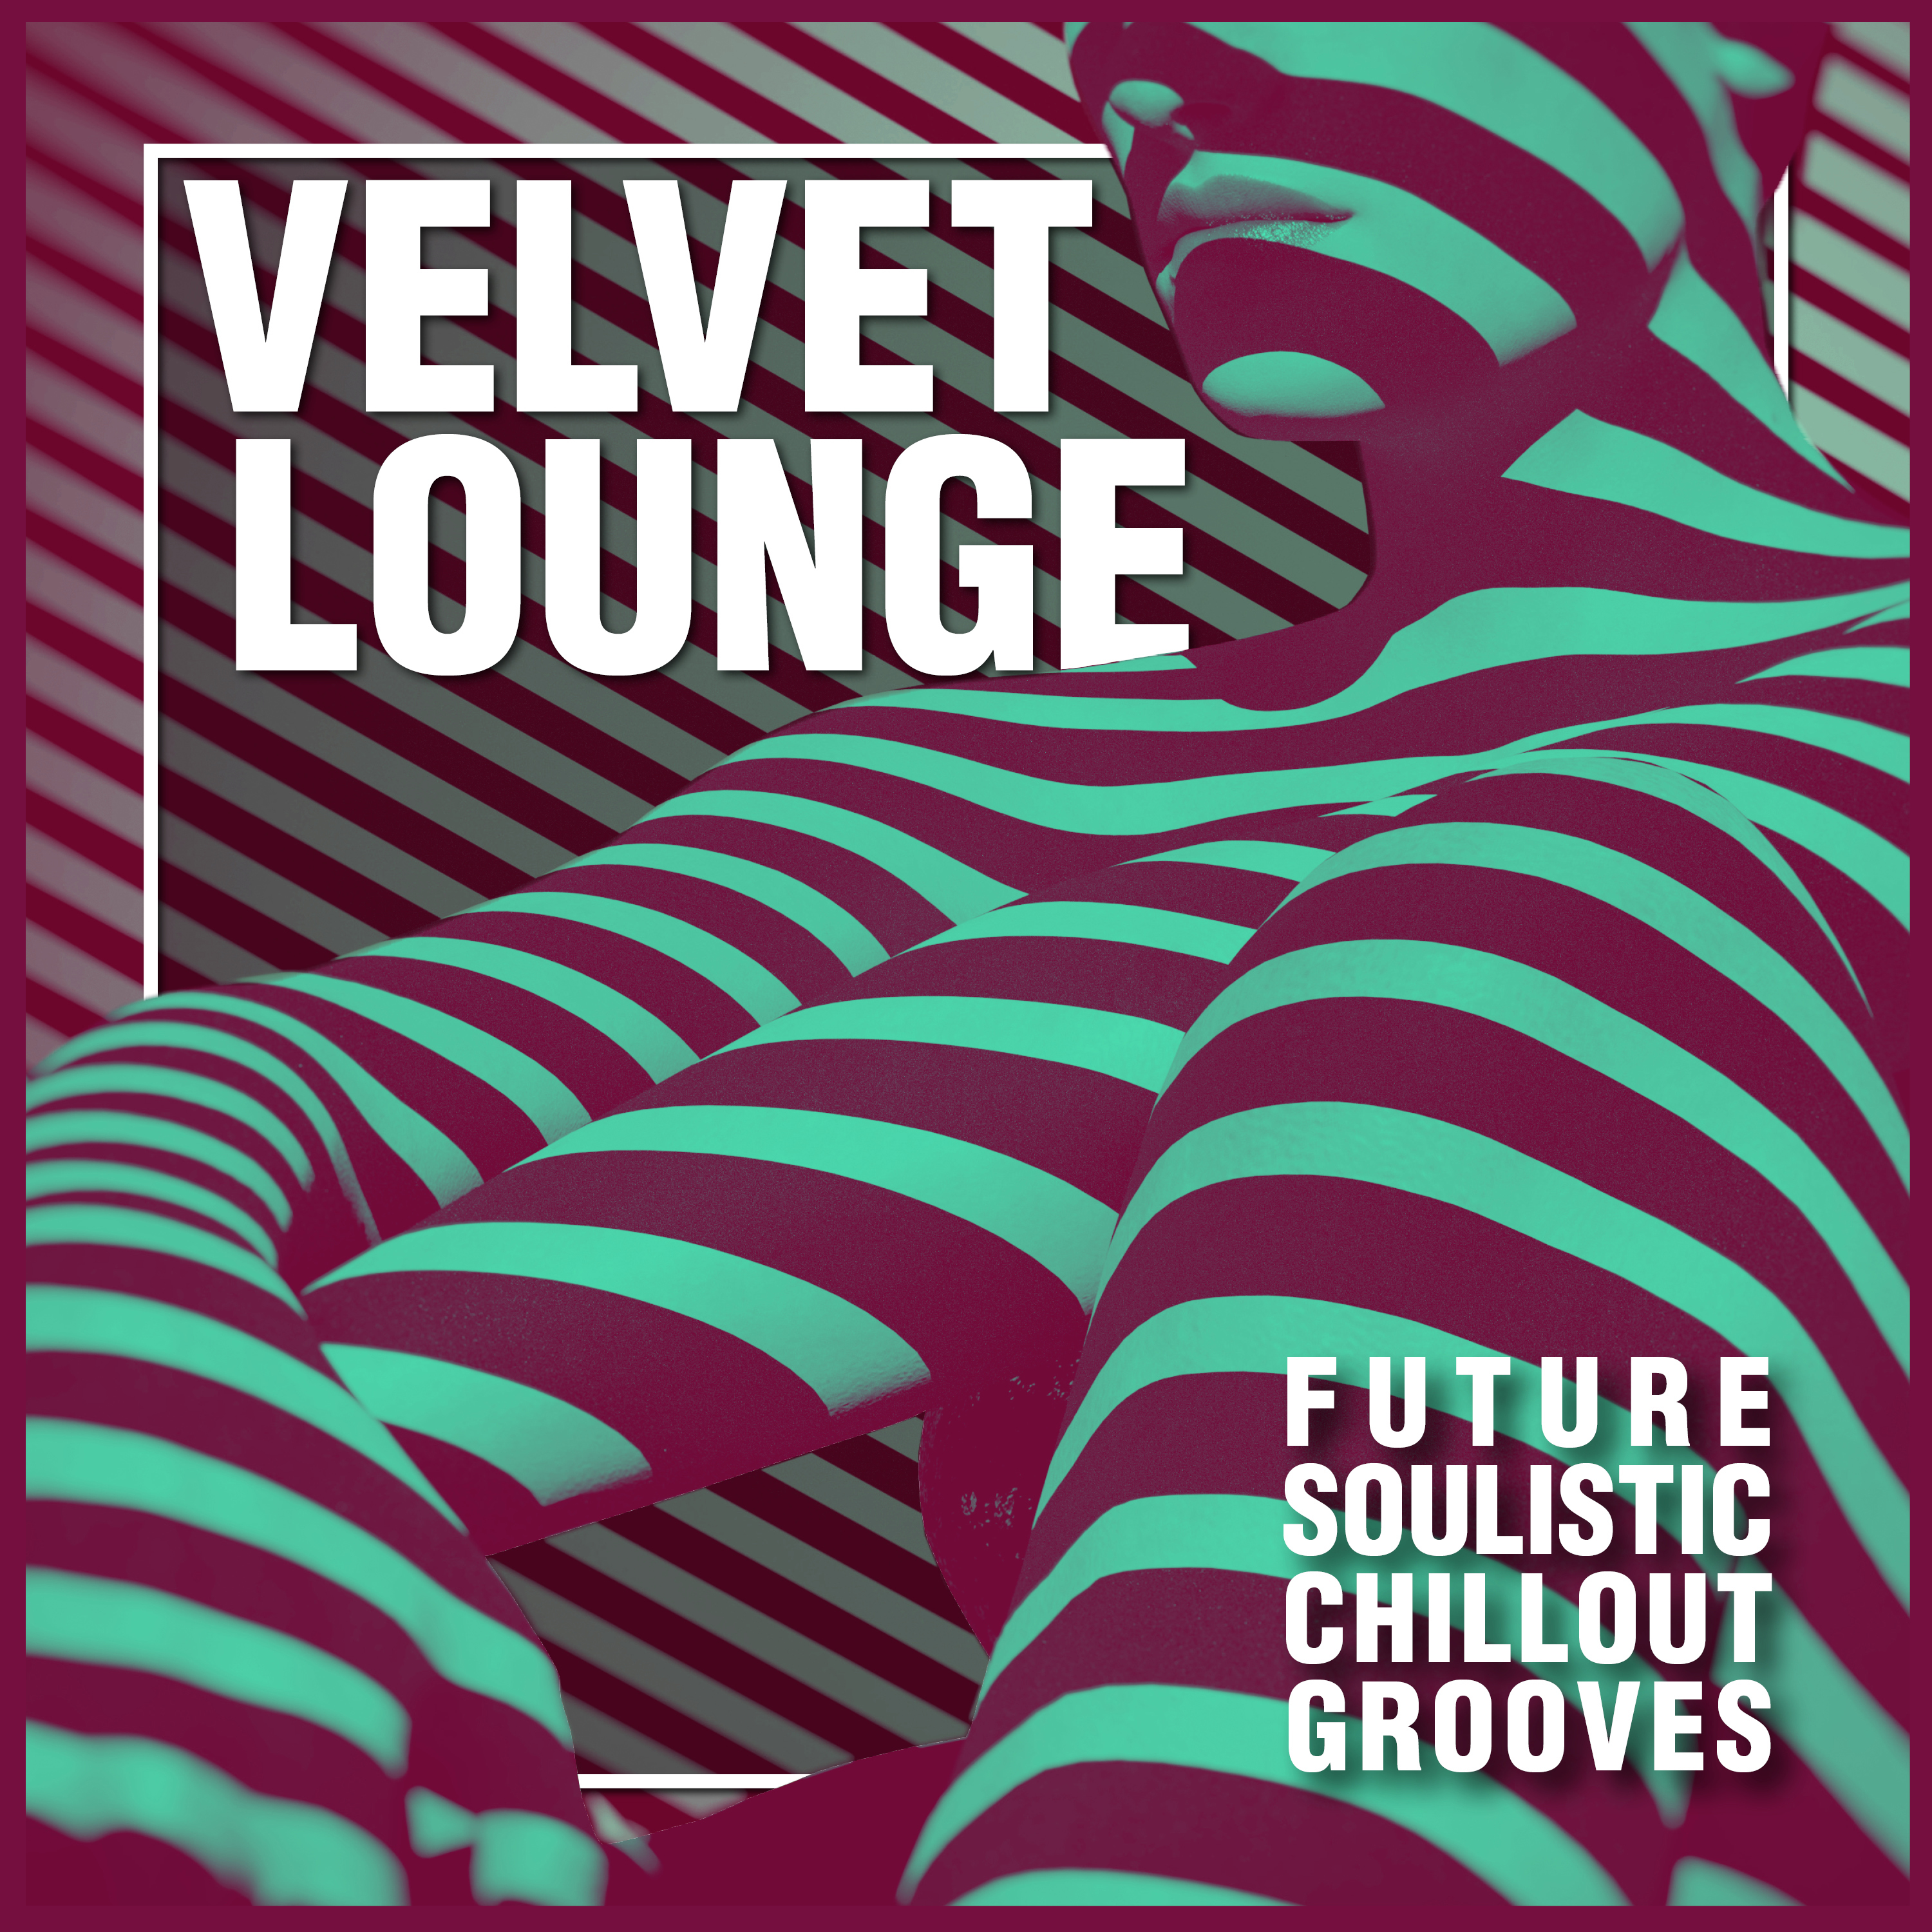 Velvet Lounge - Future Soulistic Chillout Grooves